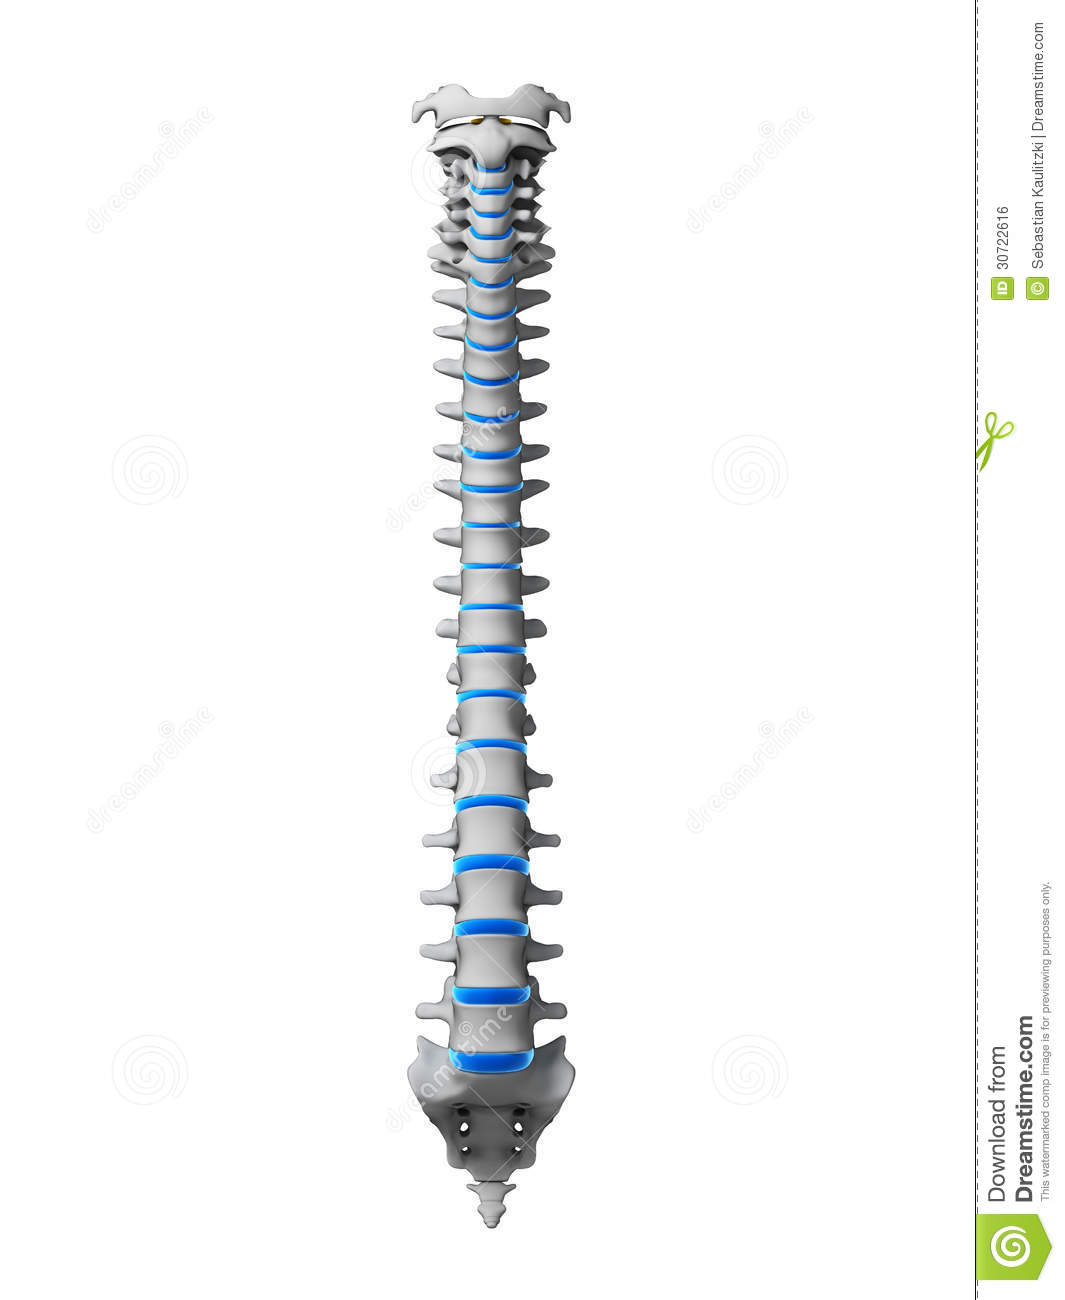 Human Spine Royalty Free Stock Image   Image  30722616